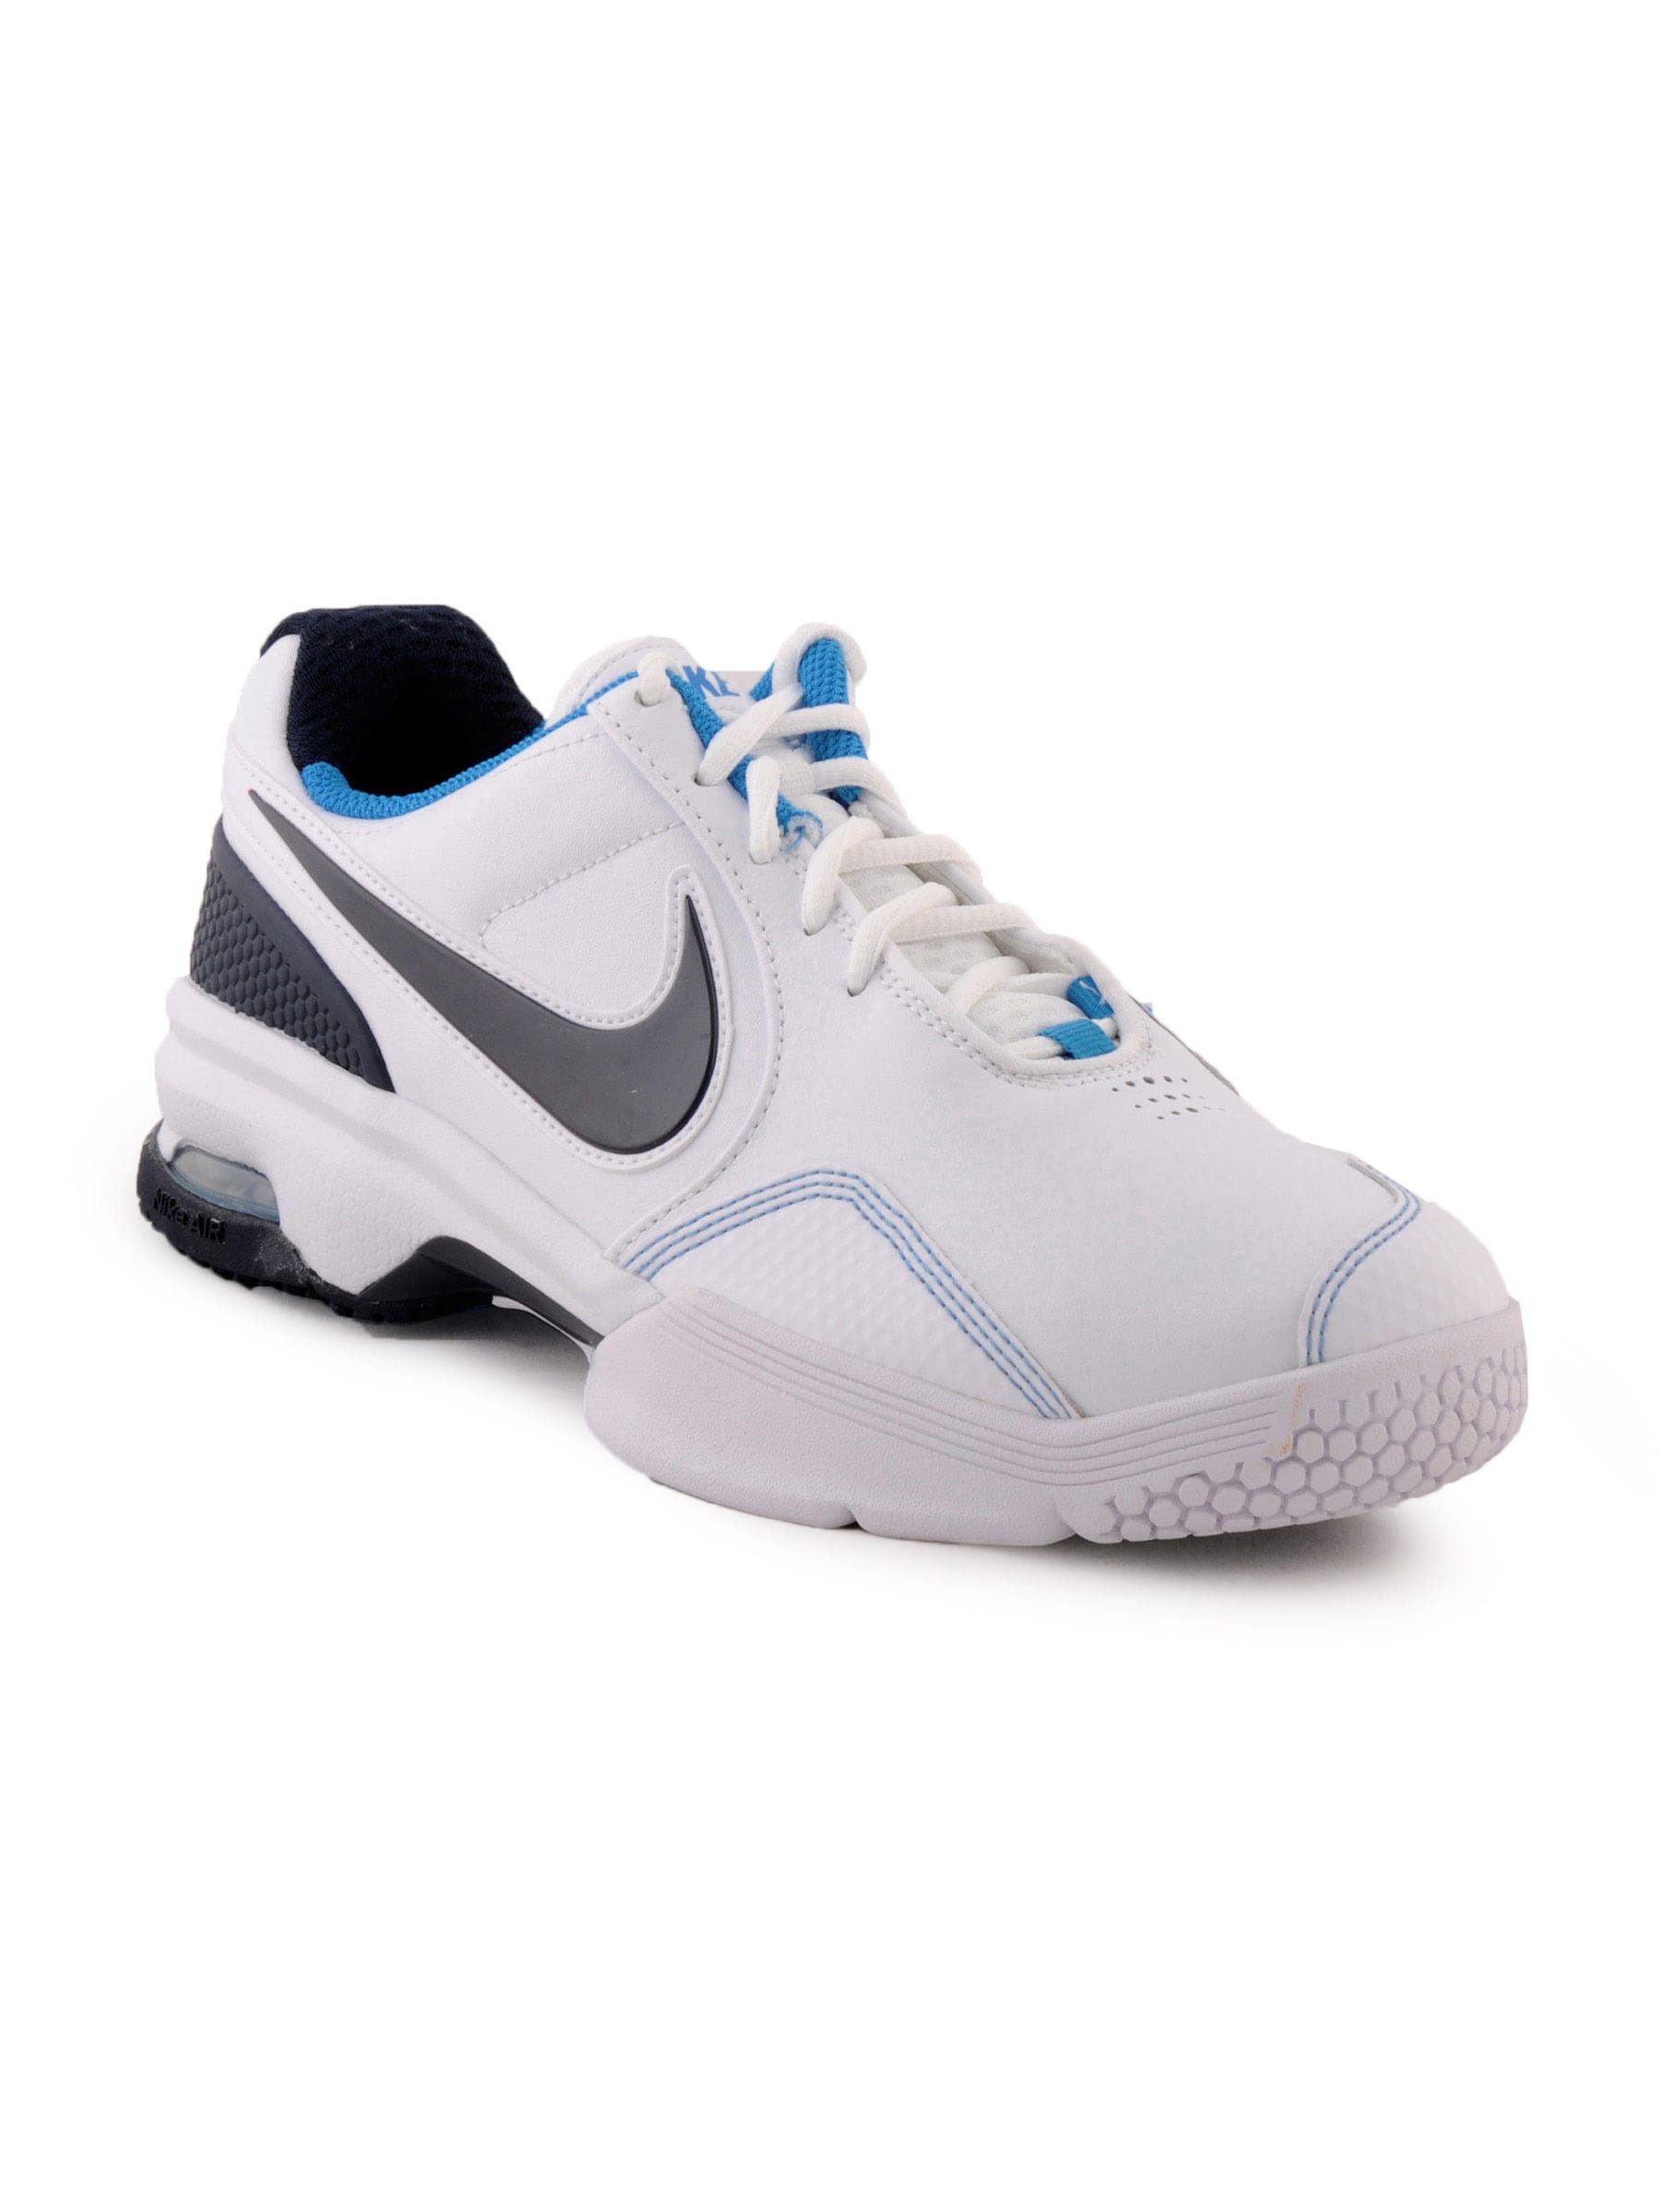 Nike Men Air Courtballistic White Sports Shoes